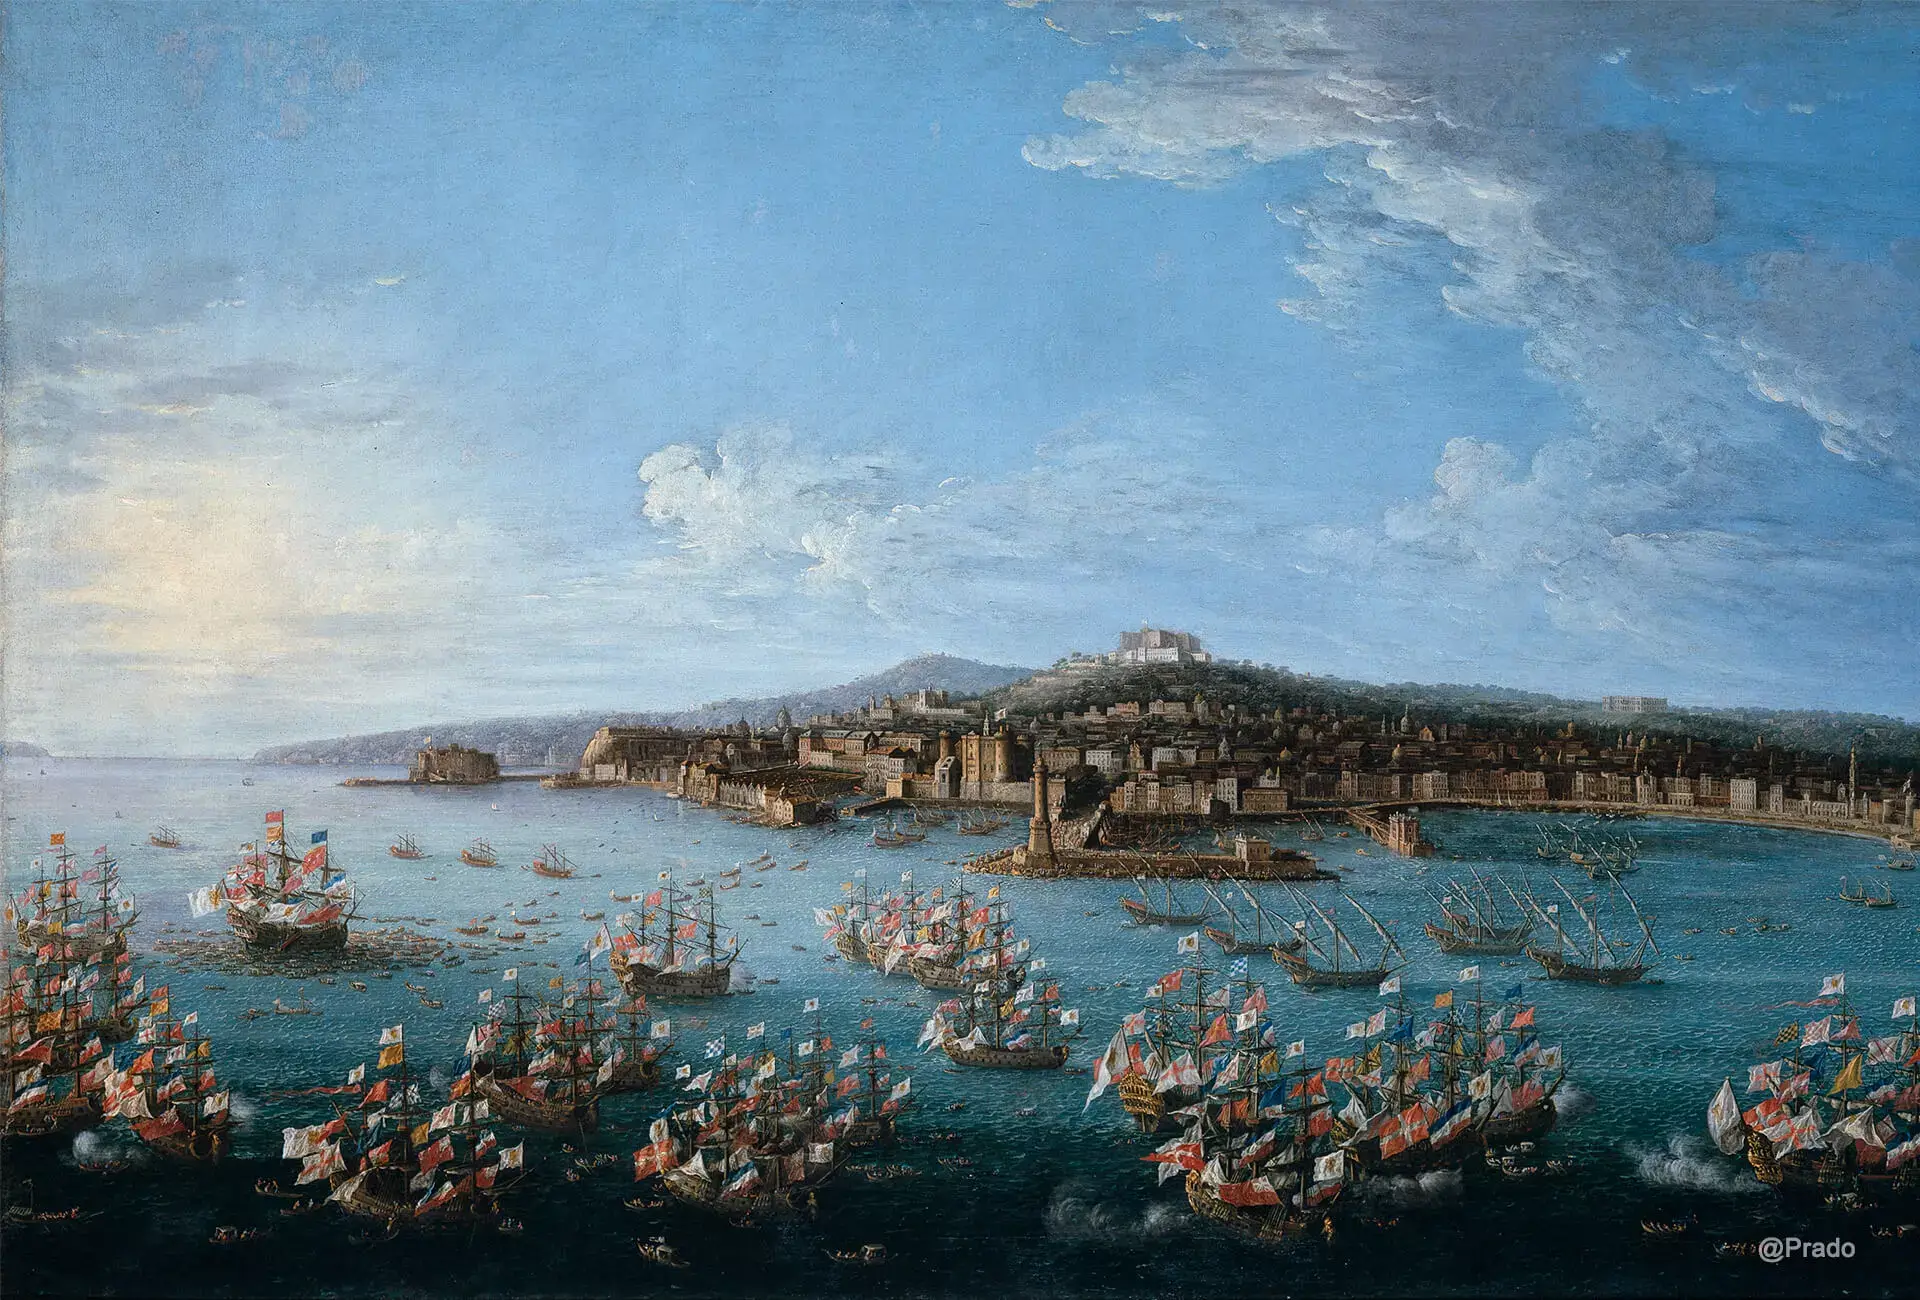 Antonio Joli Carlo Iii Abdica In Favore Di Ferdinando Lascia Napoli, Palace of Caserta Unofficial